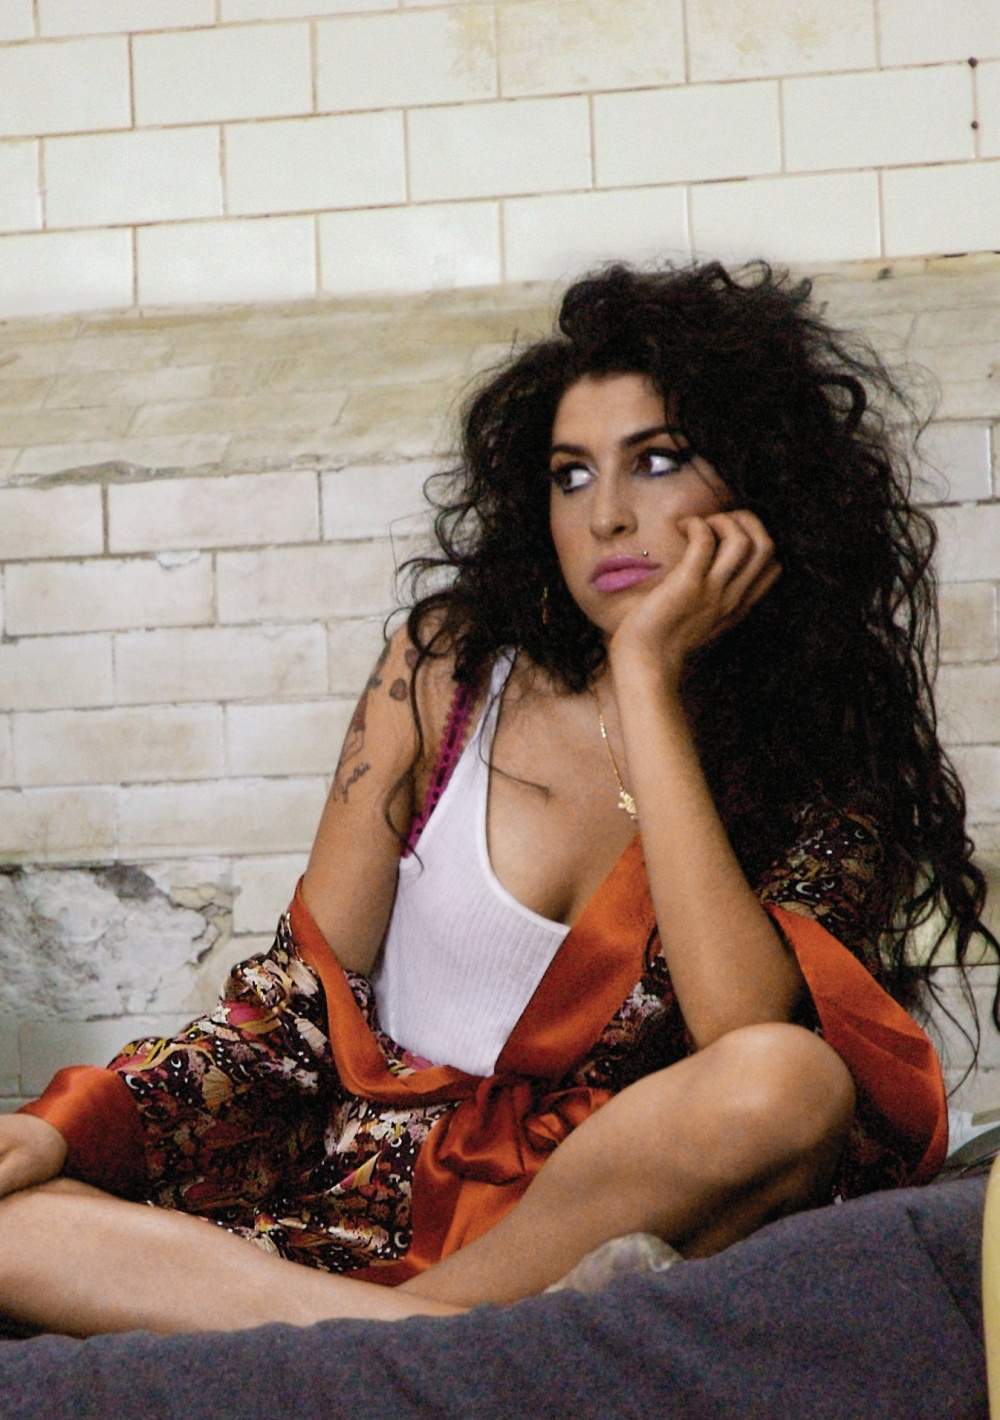 Nekrolog:Amy Winehouse - Death, Drugs and Rock’n’roll